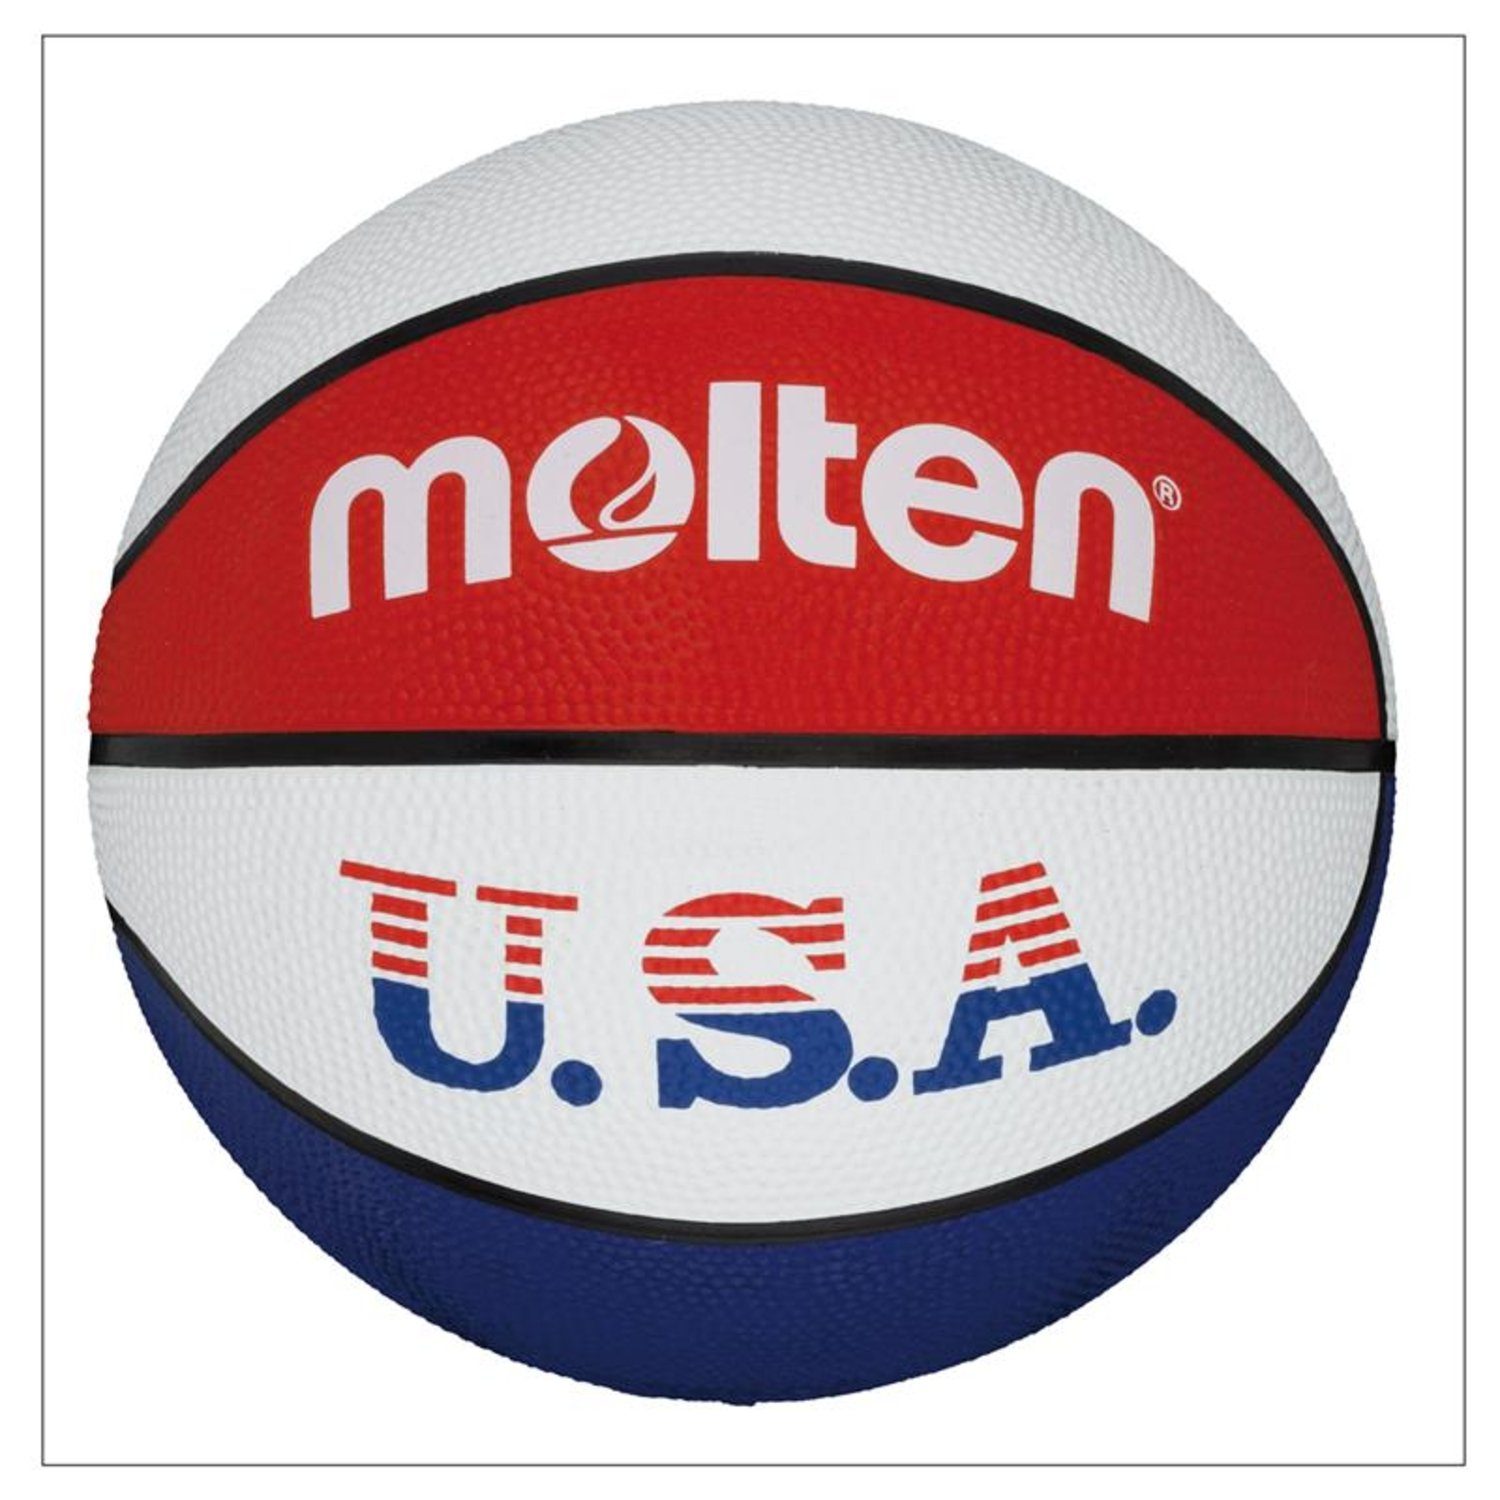 Gr. 7 Molten Basketballkorb Trainingsball BC7R-USA USA,